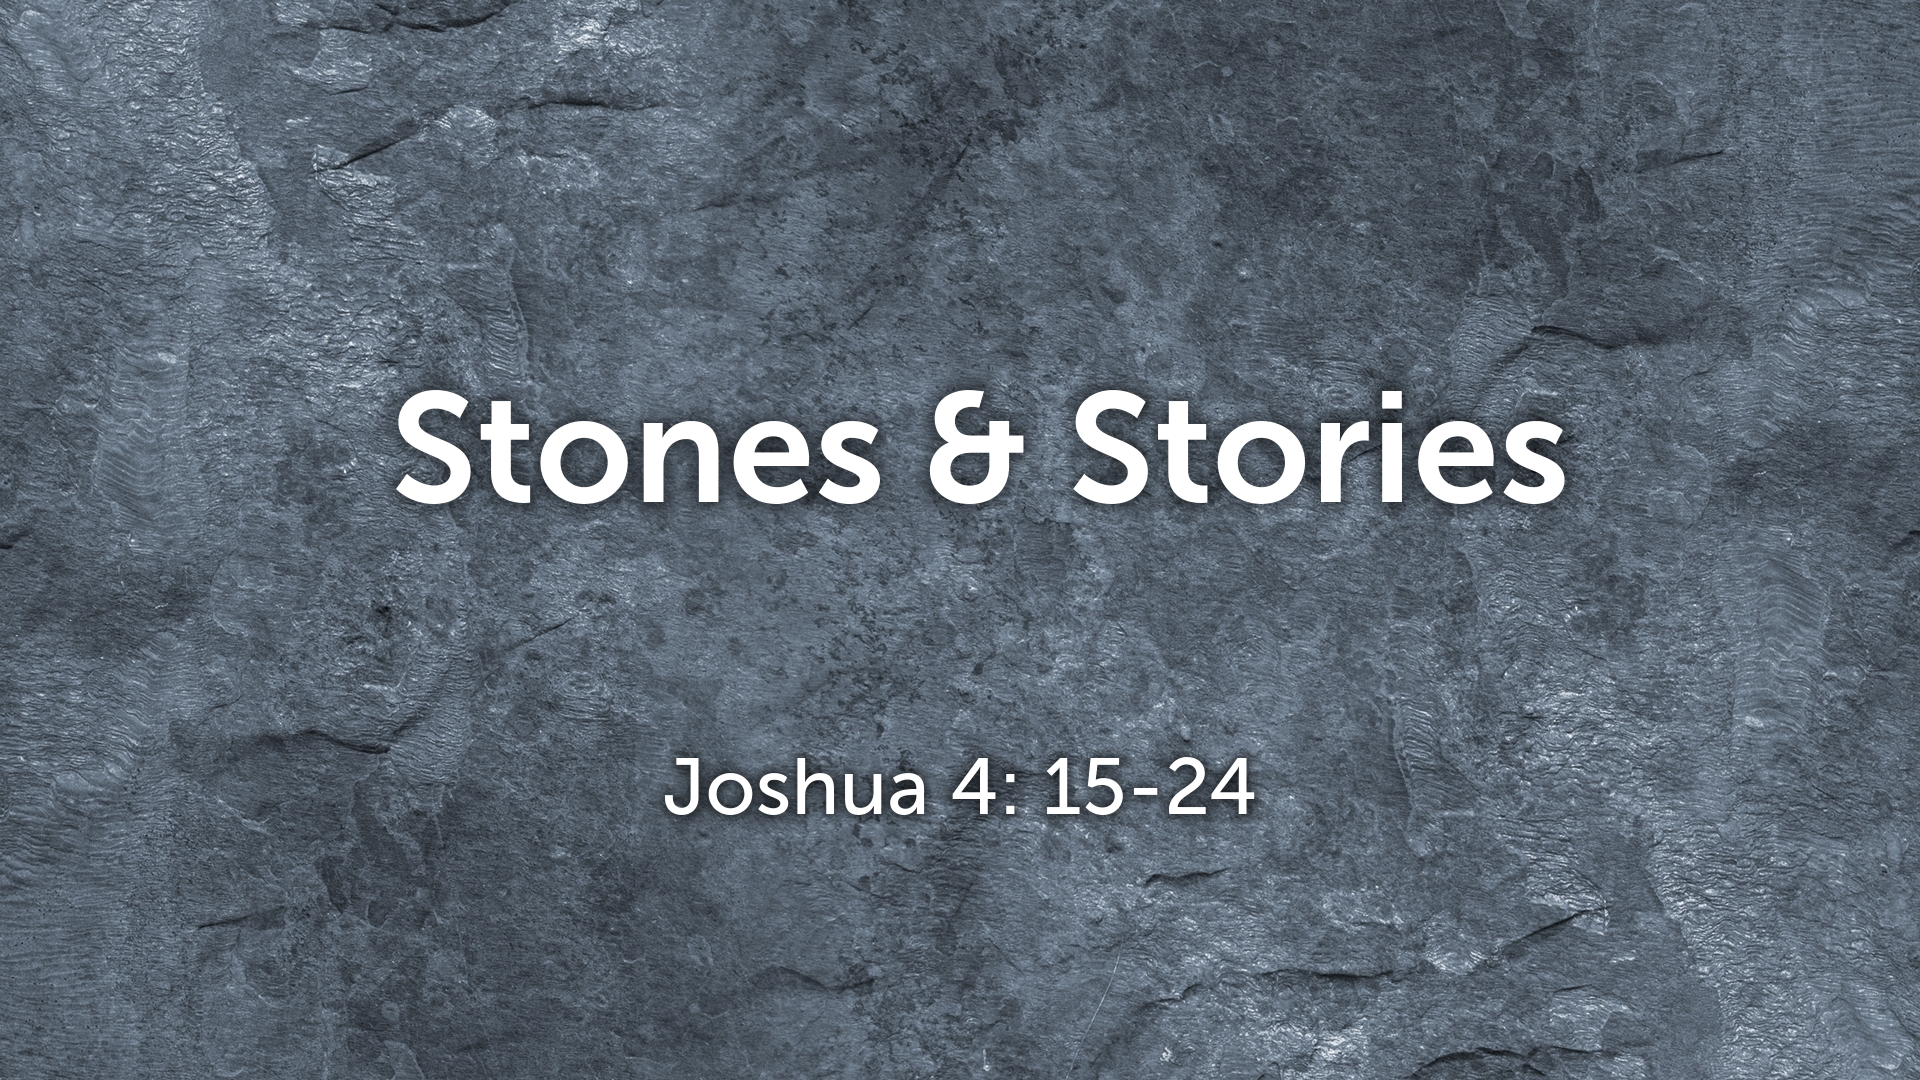 May 1, 2022 - Stones & Stories (Video) Joshua 4: 15-24